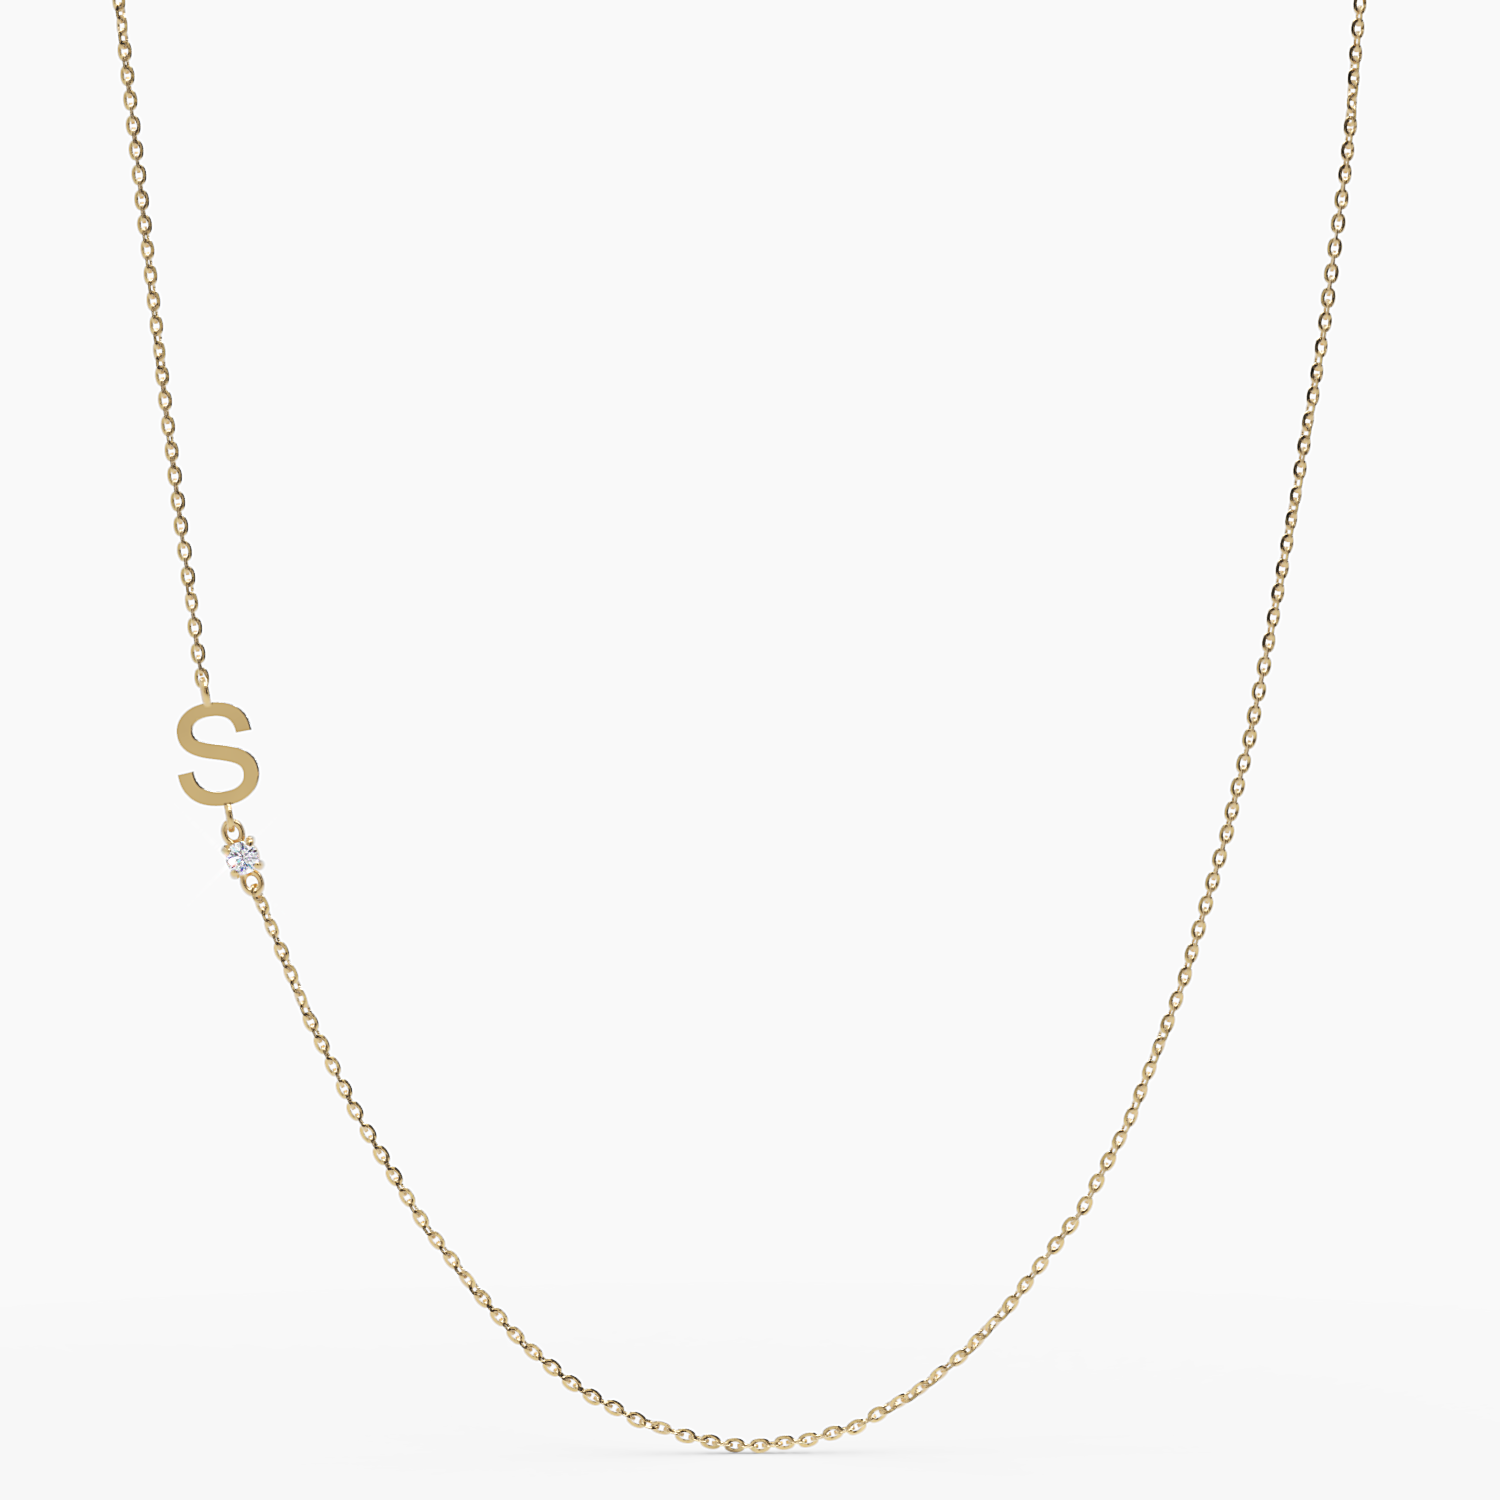 Sideways Initial S Necklace with Diamond